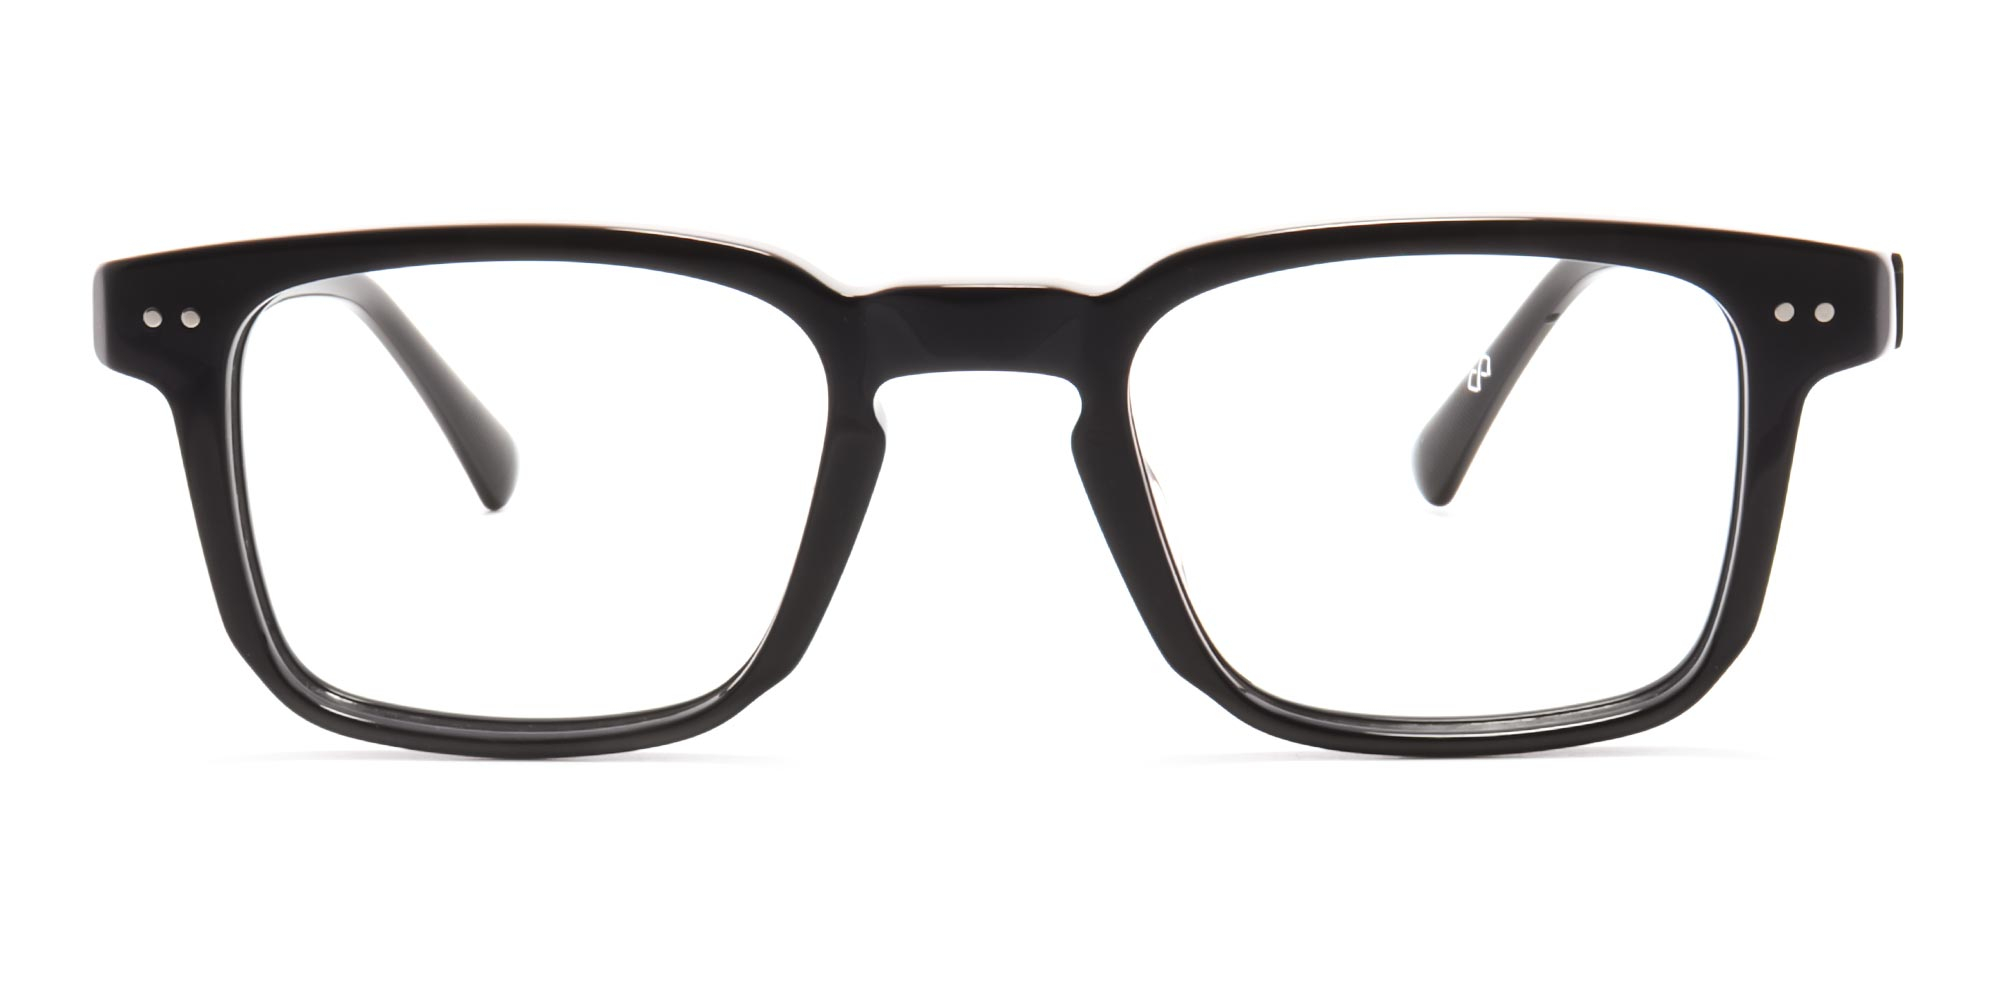 classic square eyeglasses frames -1